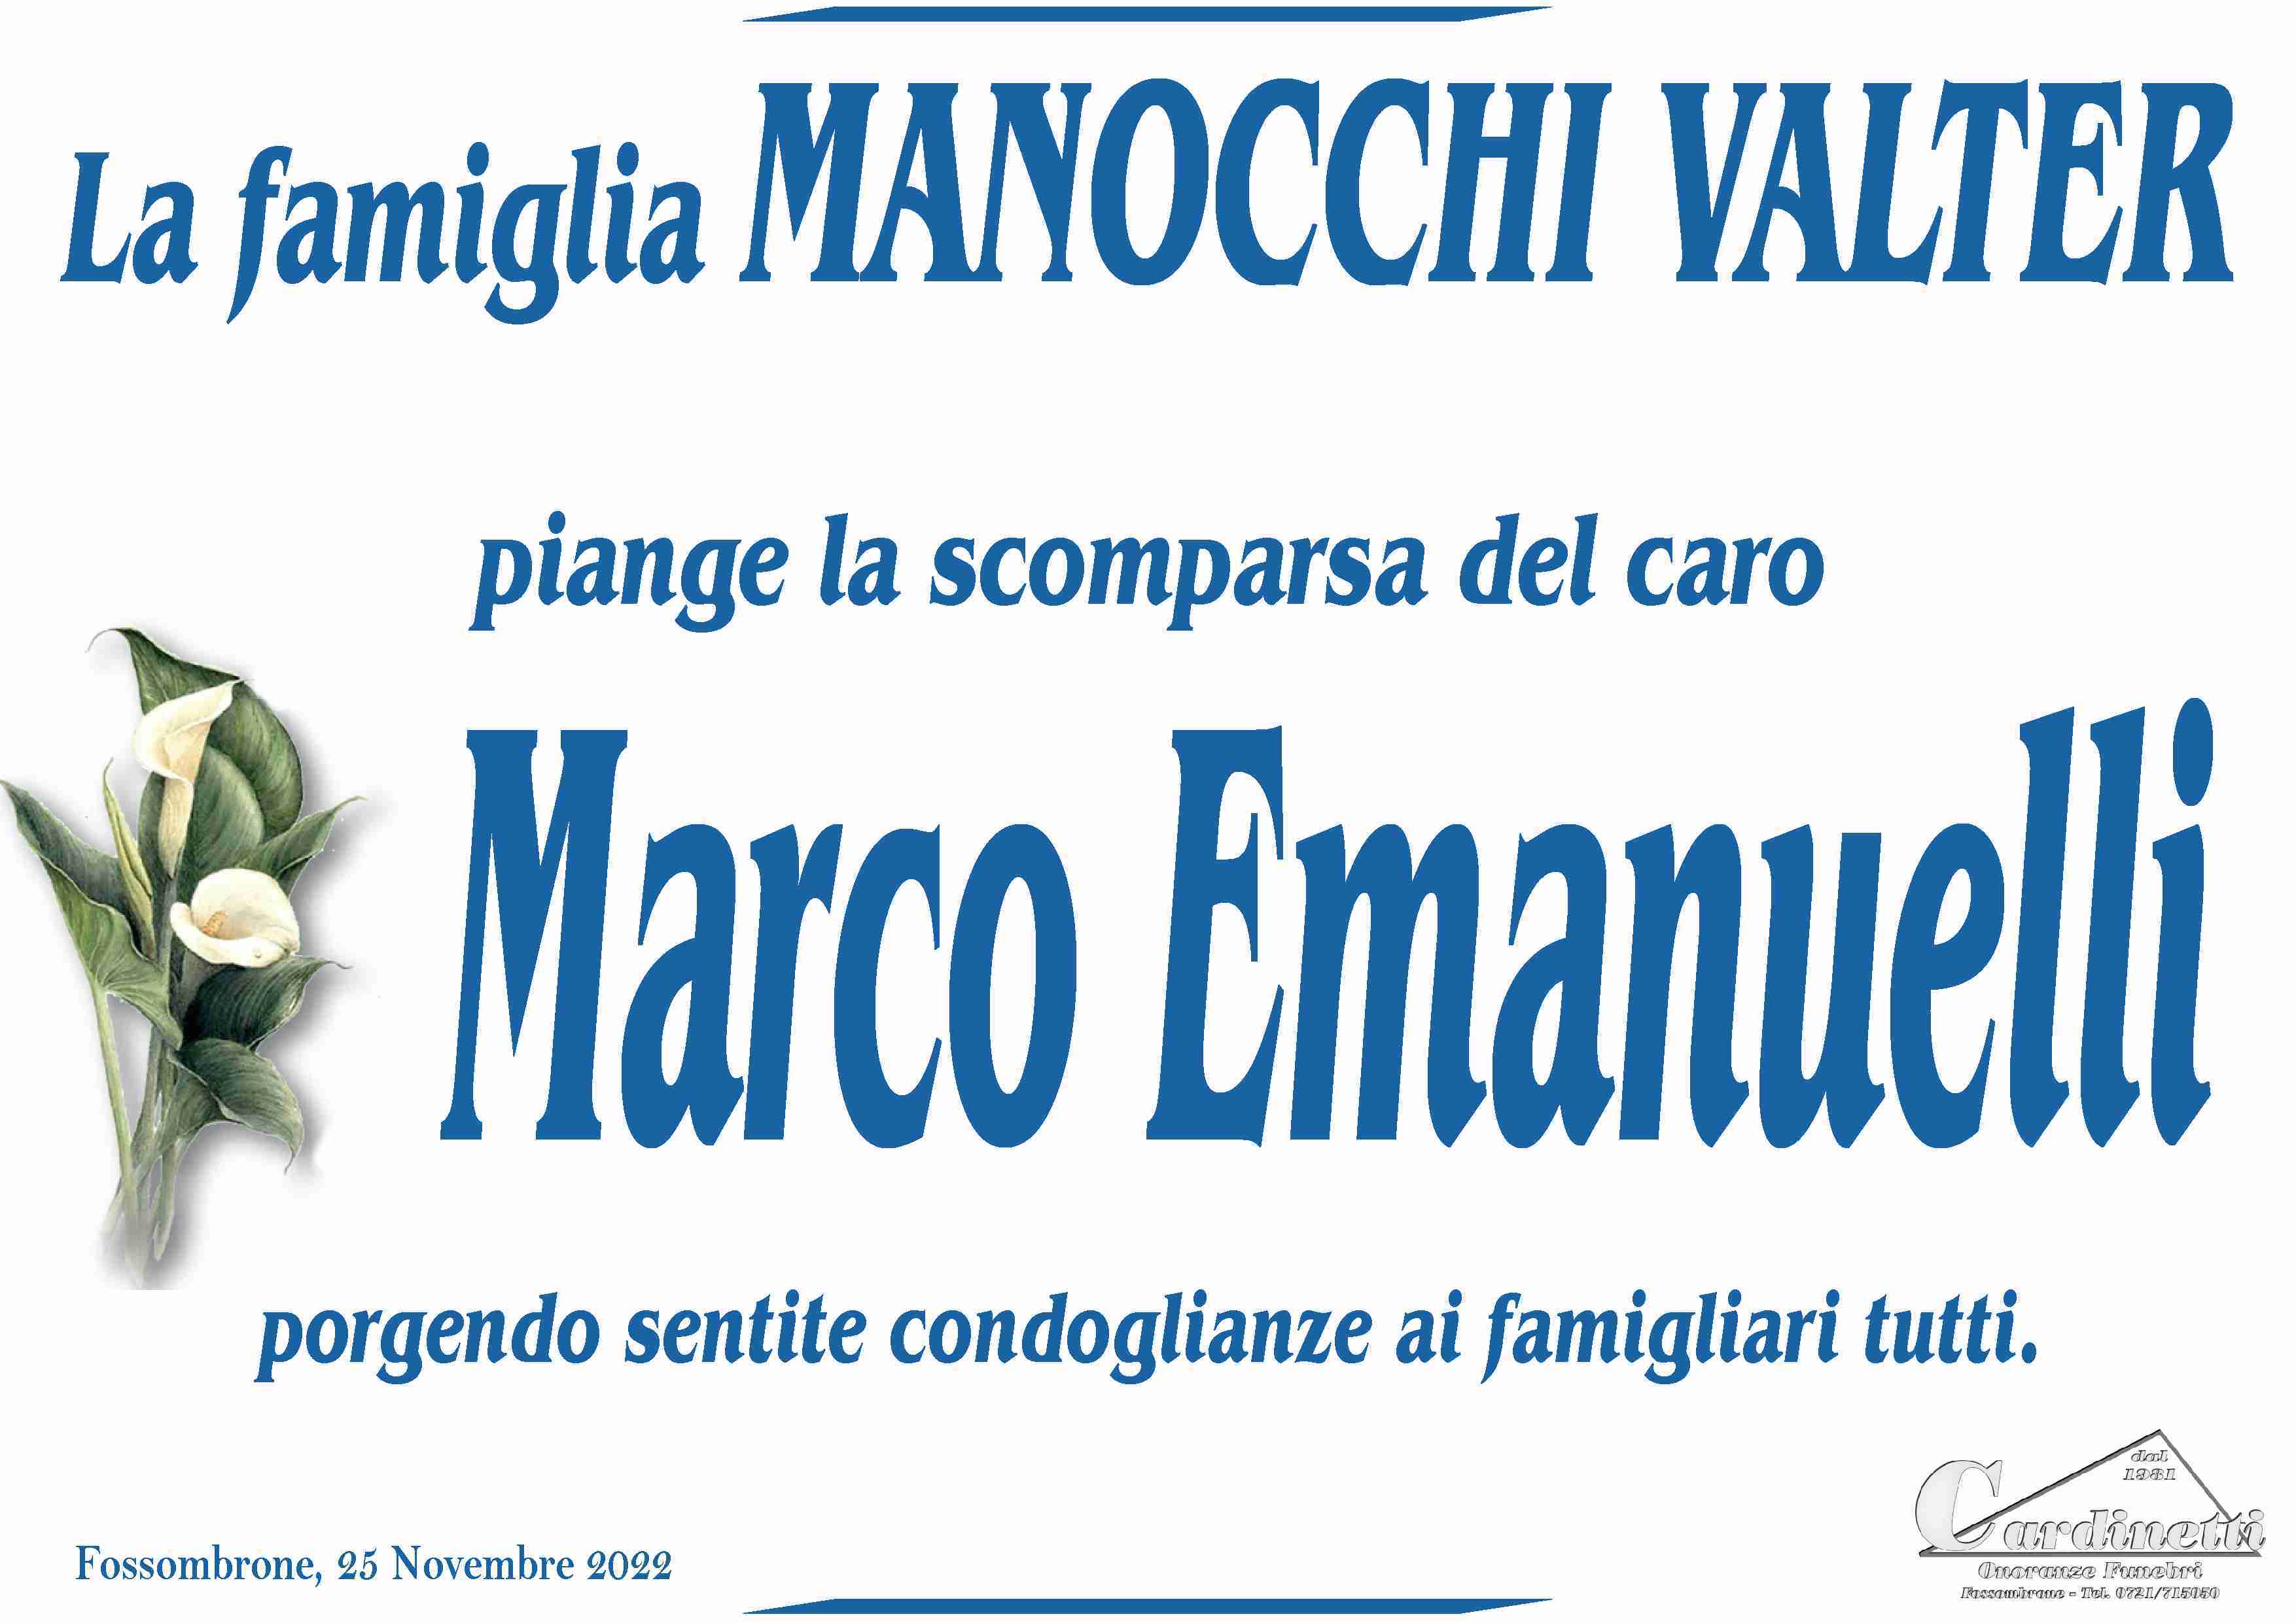 Dott. Marco Emanuelli